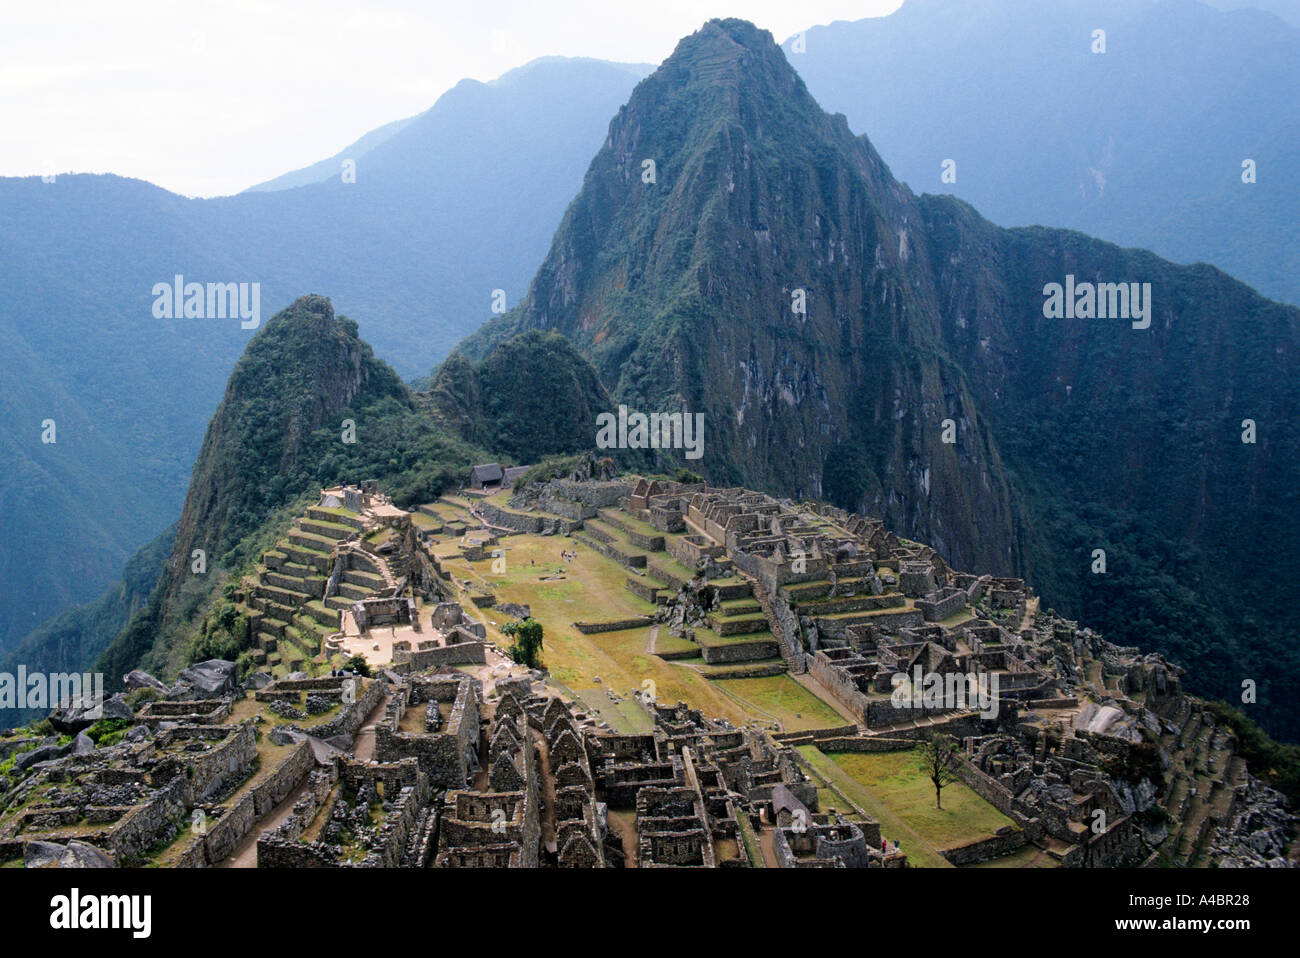 Machu Picchu, Perù. Panoramica delle rovine Inca; Urubamba/fiume Vilcanota spartiacque. Foto Stock